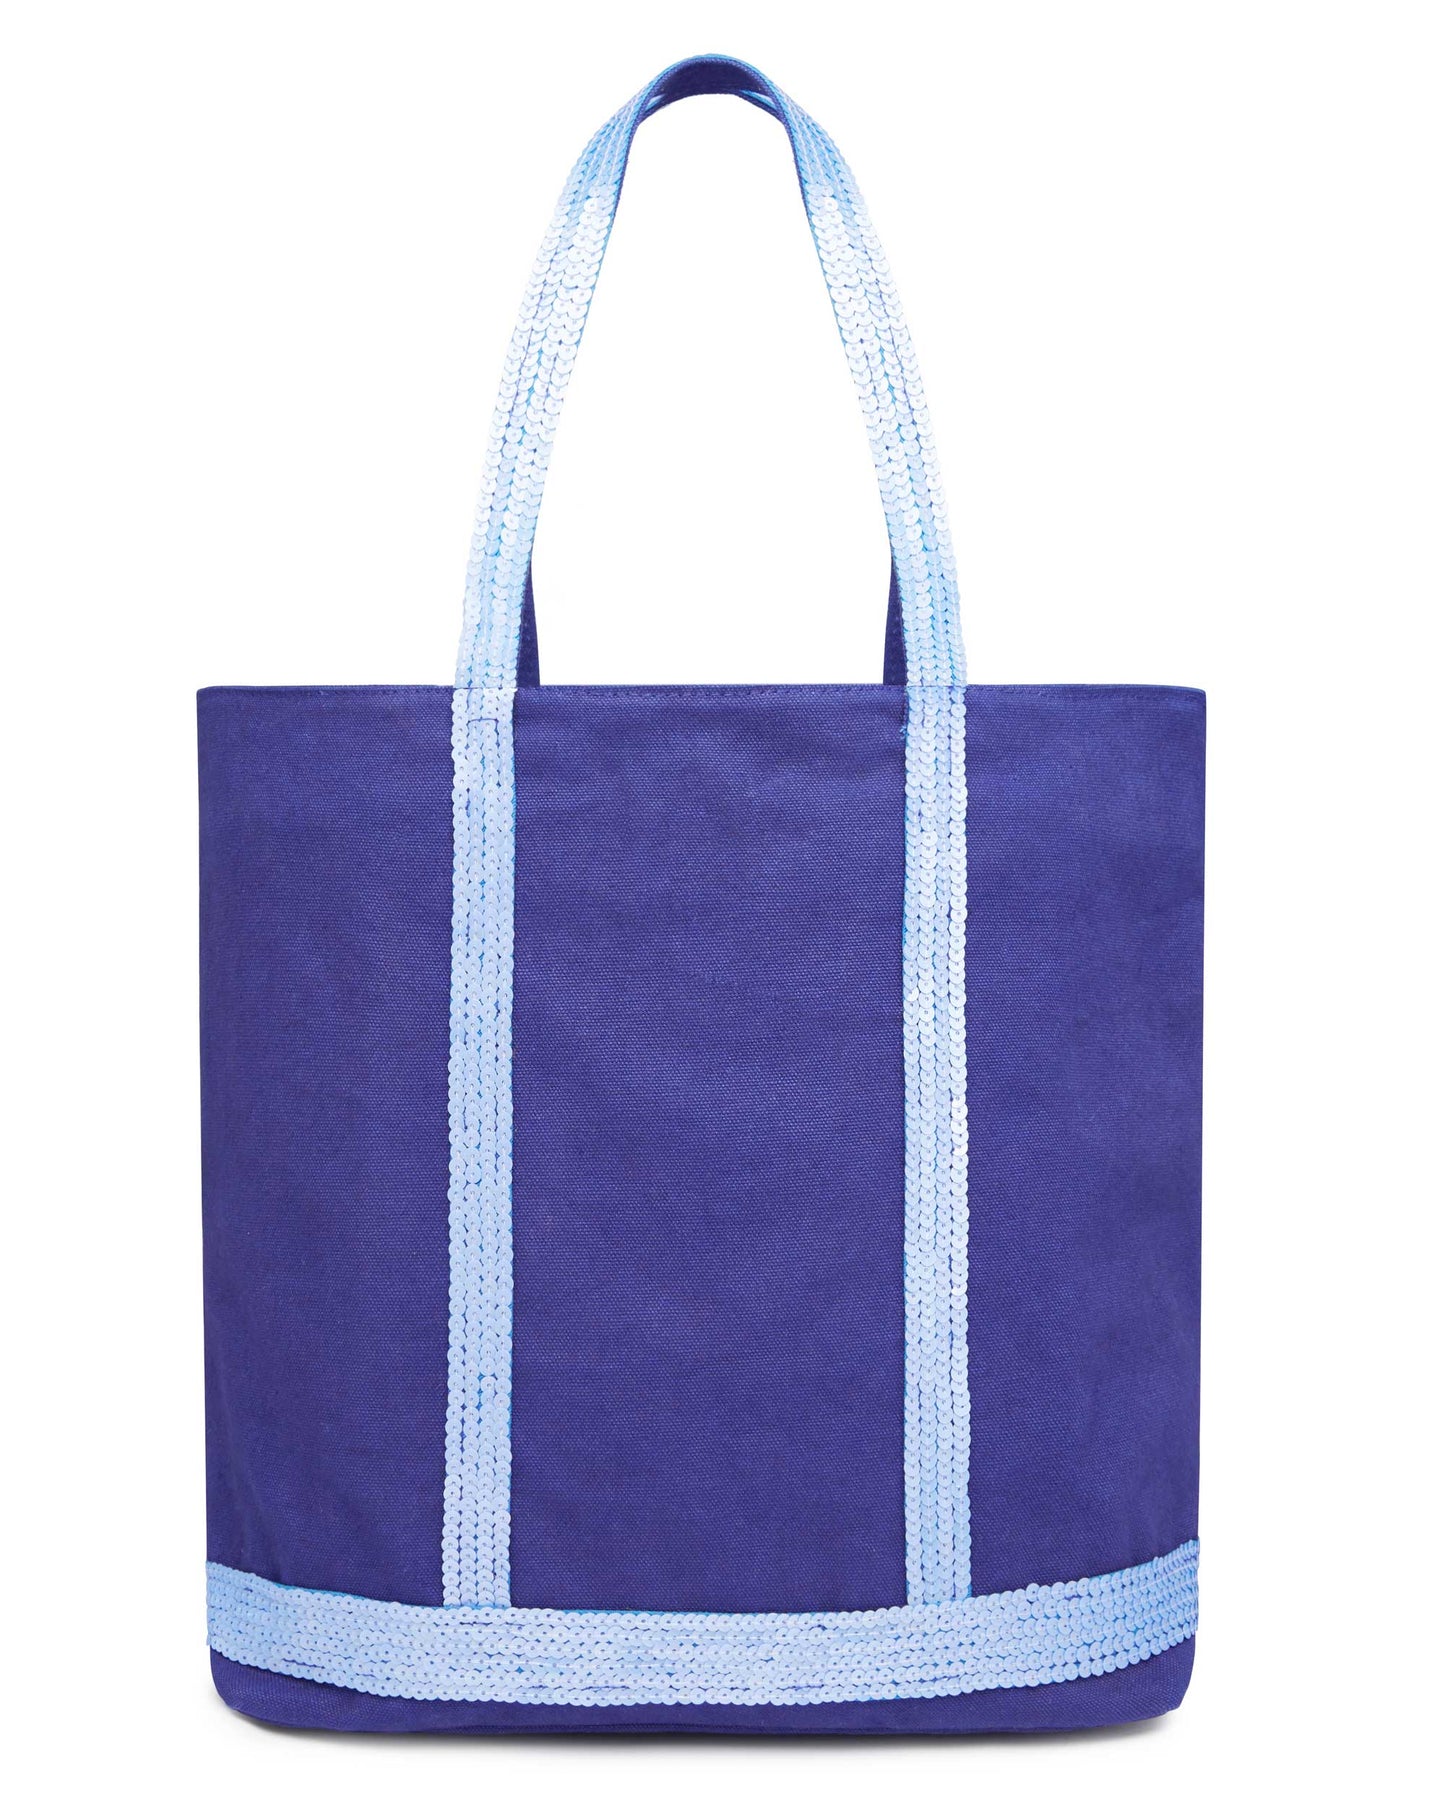 100% Cotton Canvas Tote Bag - Medium Size Tote Bag